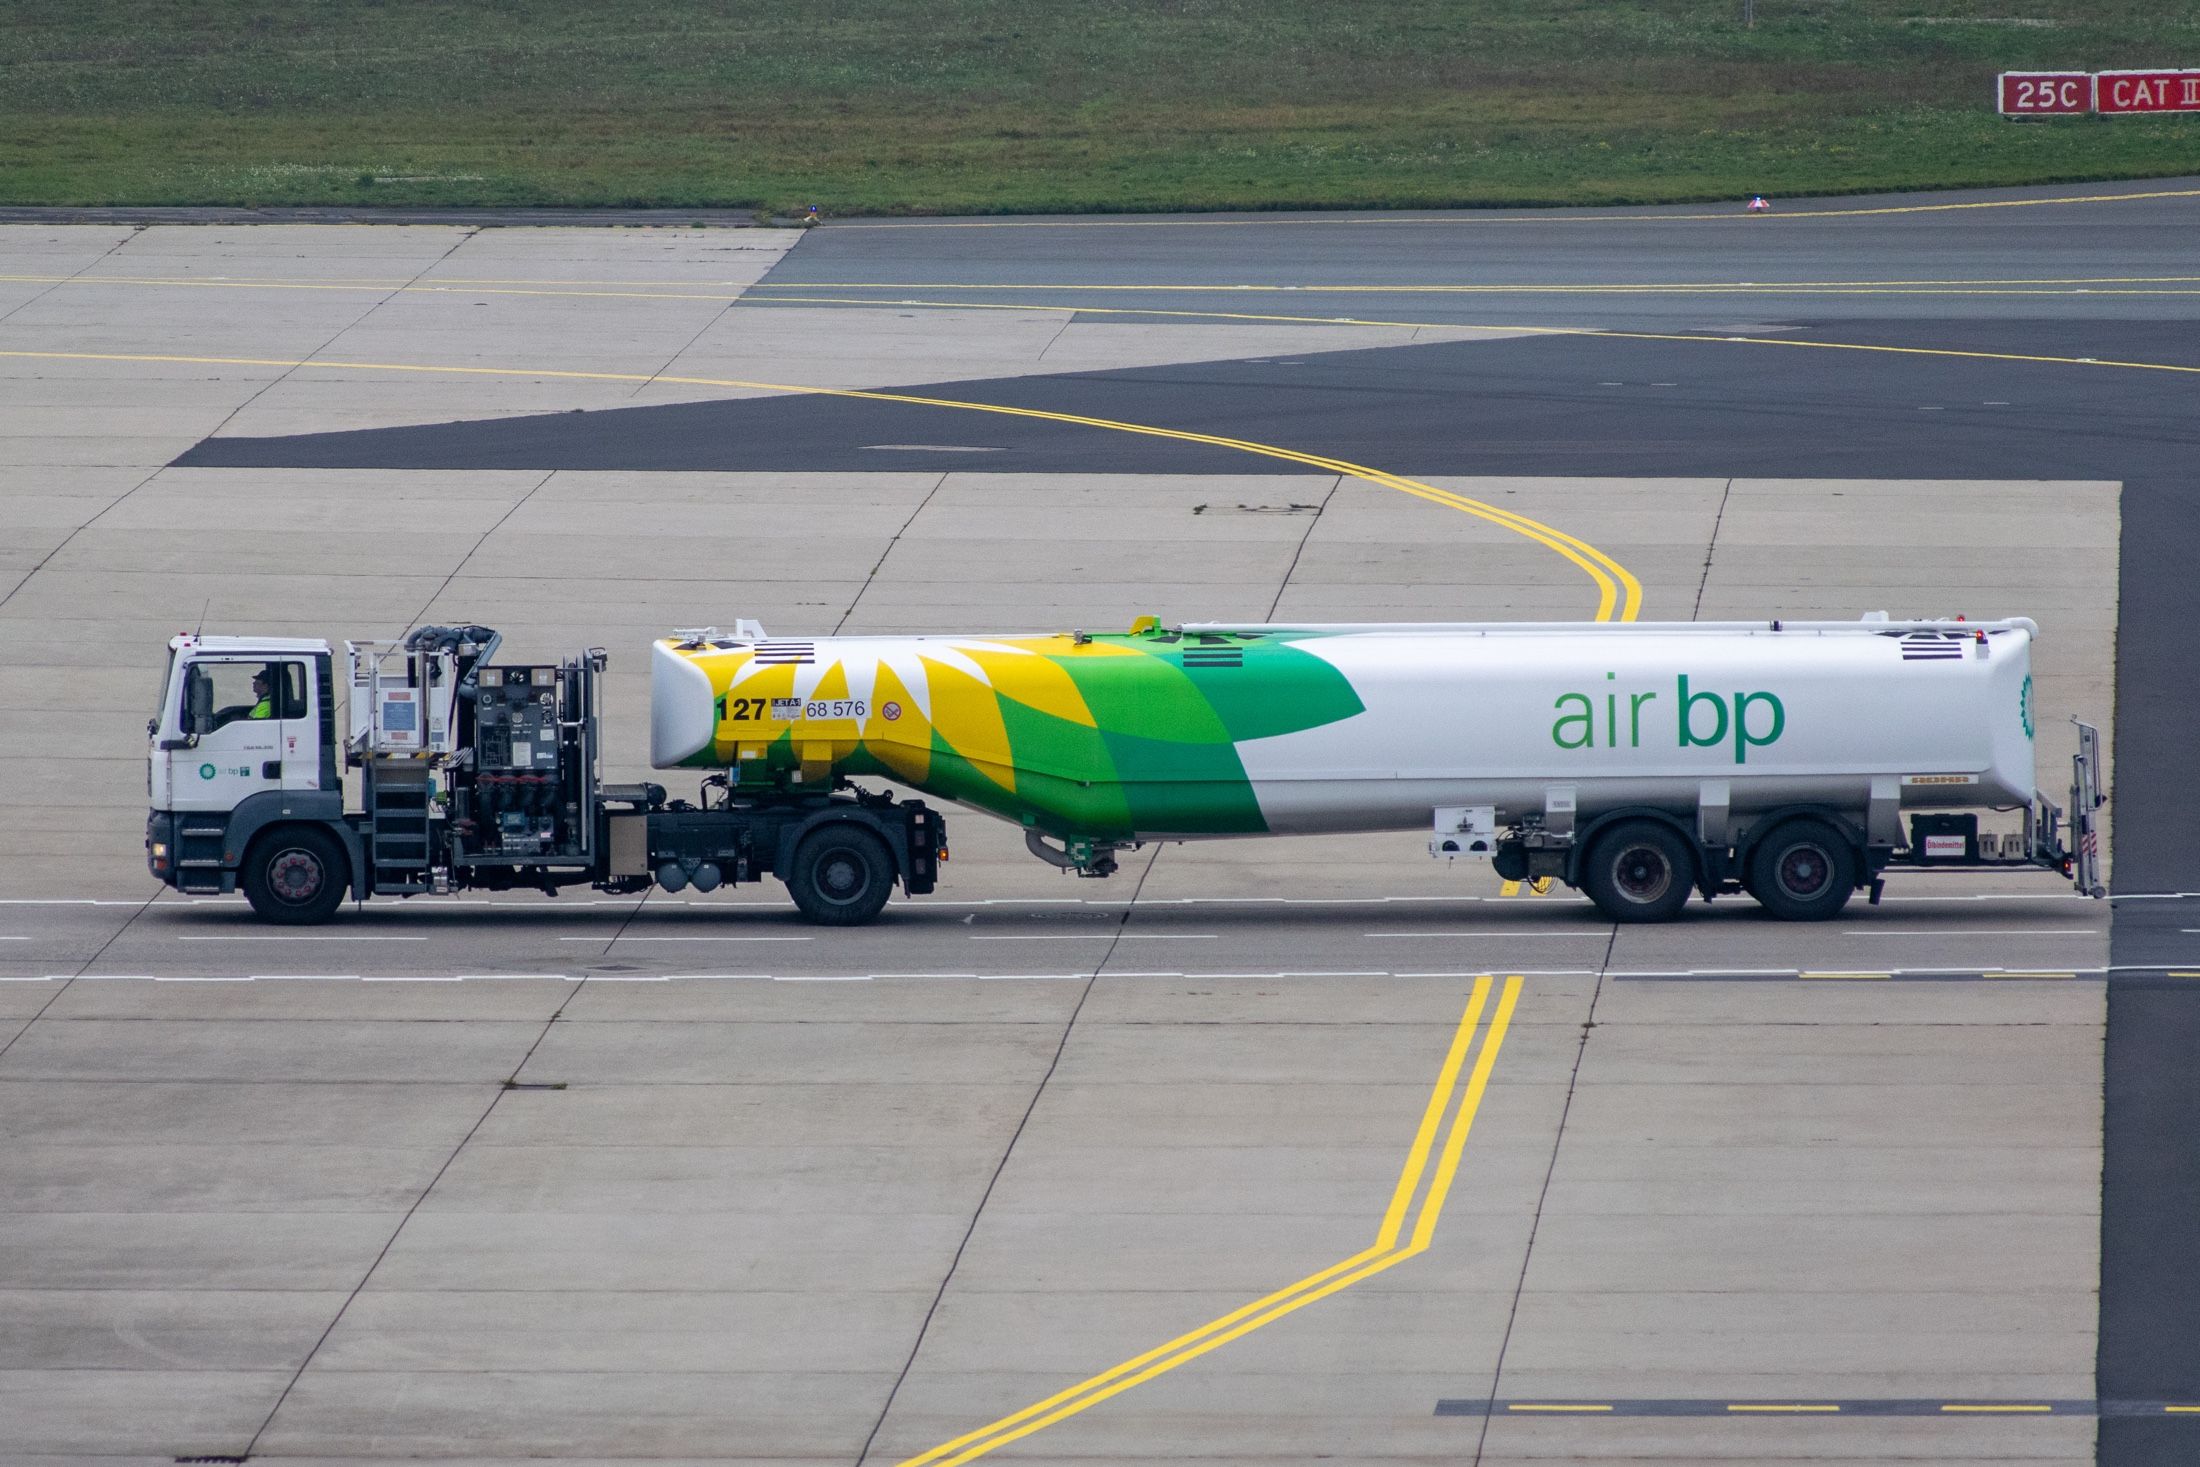 An Air BP Fuel Truck on an Airport